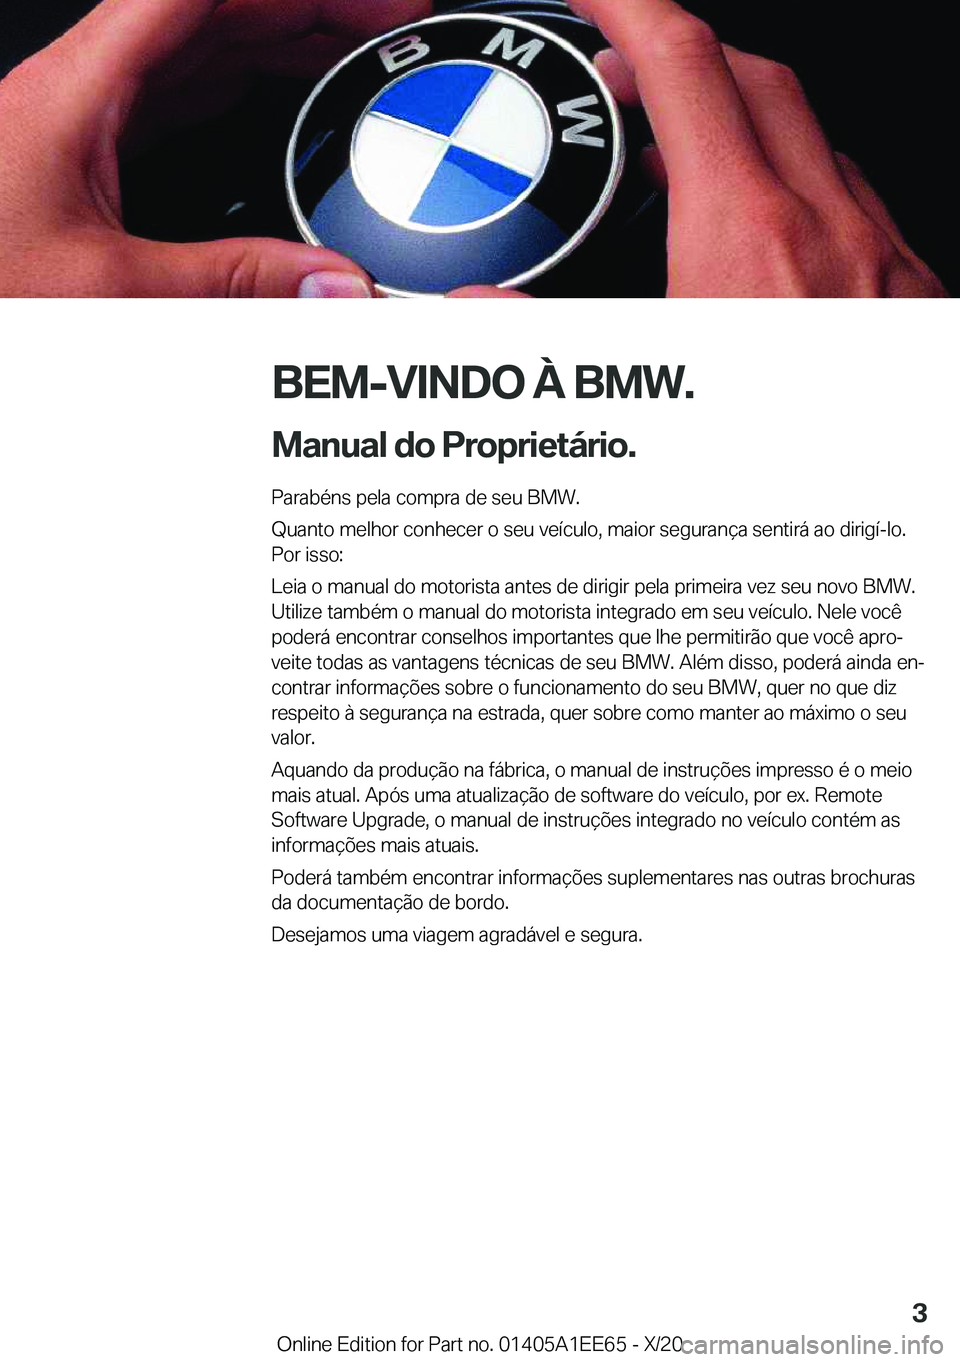 BMW 8 SERIES CONVERTIBLE 2021  Manual do condutor (in Portuguese) �B�E�M�-�V�I�N�D�O��À��B�M�W�.
�M�a�n�u�a�l��d�o��P�r�o�p�r�i�e�t�á�r�i�o�. �P�a�r�a�b�é�n�s��p�e�l�a��c�o�m�p�r�a��d�e��s�e�u��B�M�W�.
�Q�u�a�n�t�o��m�e�l�h�o�r��c�o�n�h�e�c�e�r��o��s